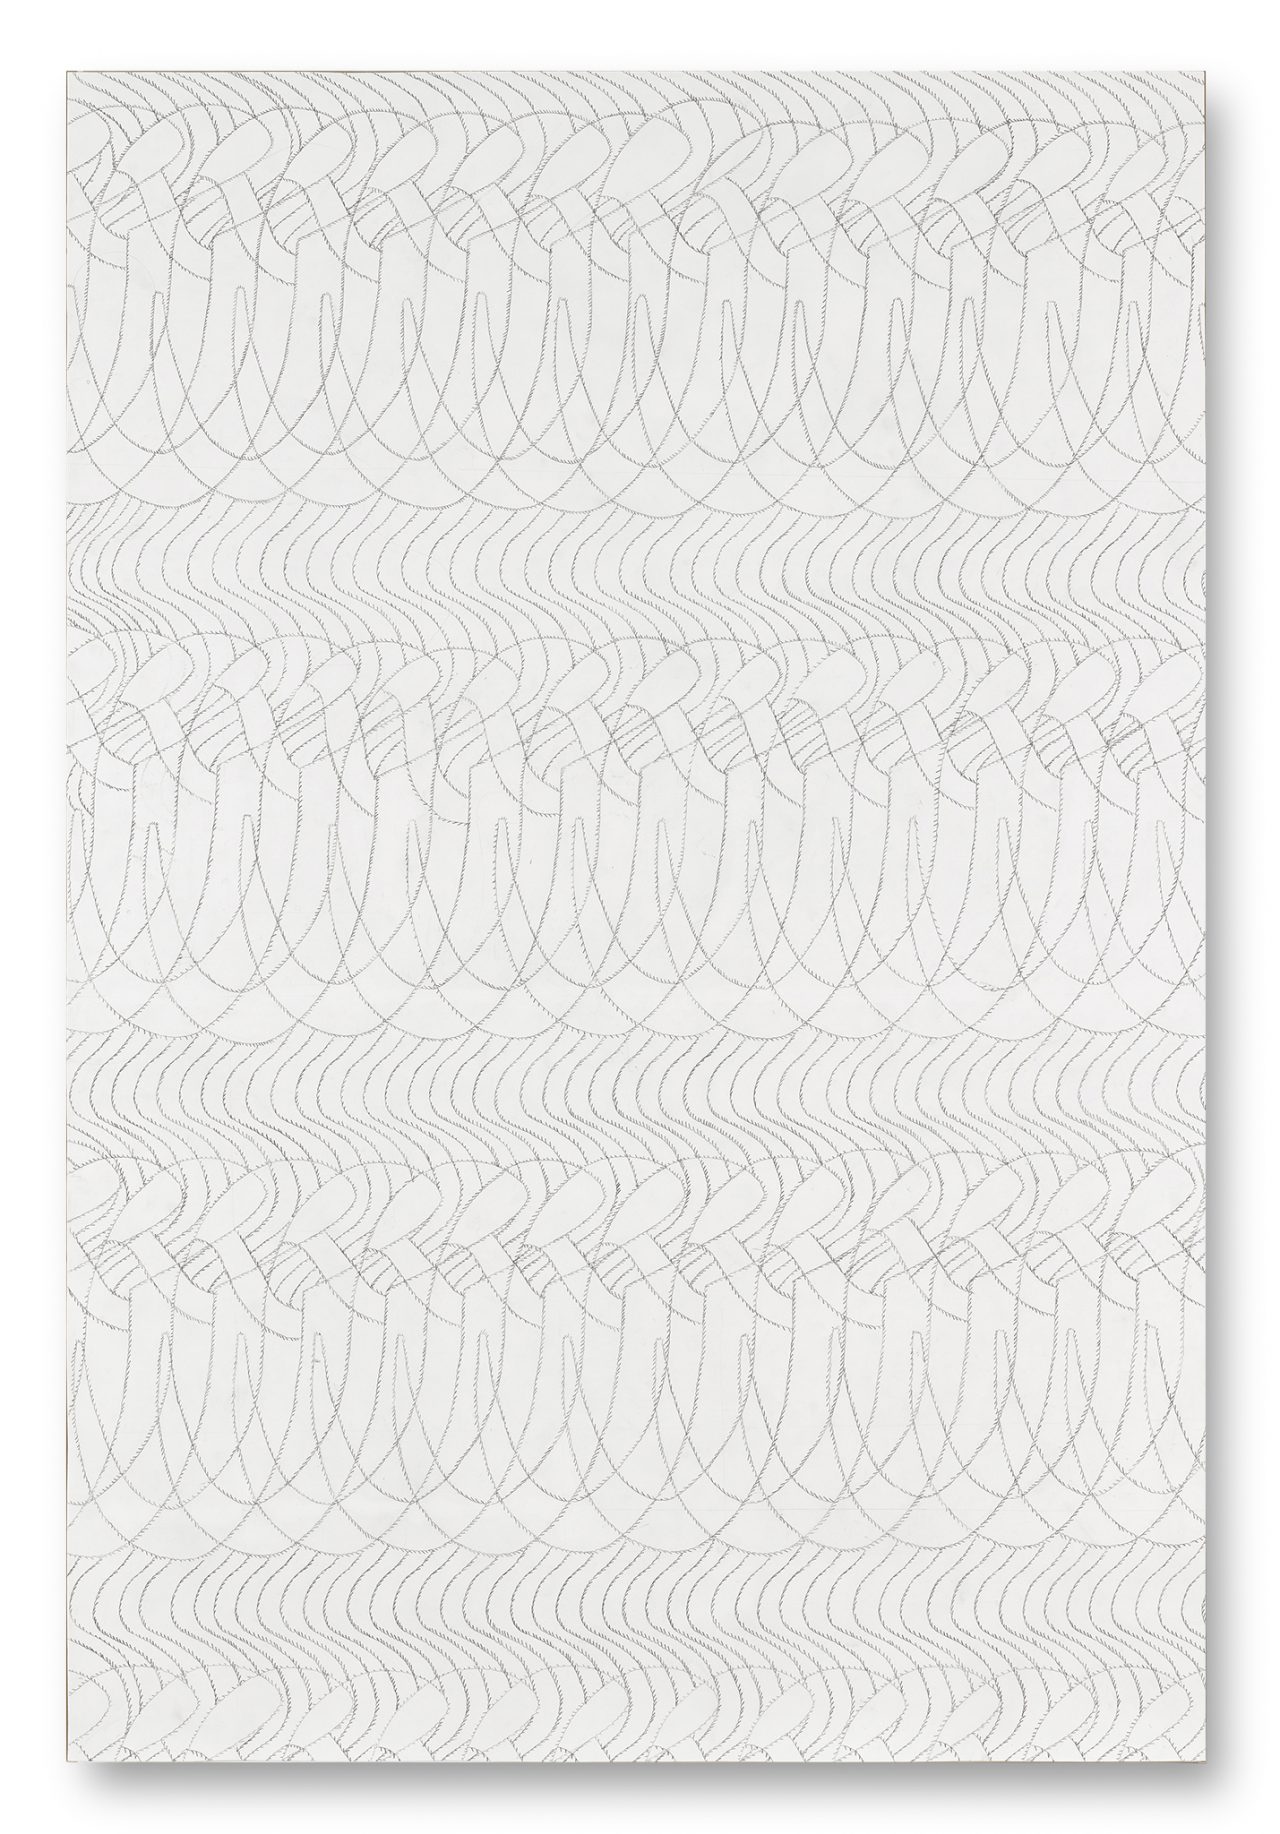 drawing pencil paper detail contemporary patrick roman scherer ornament vienna fine art installation object minimal pattern